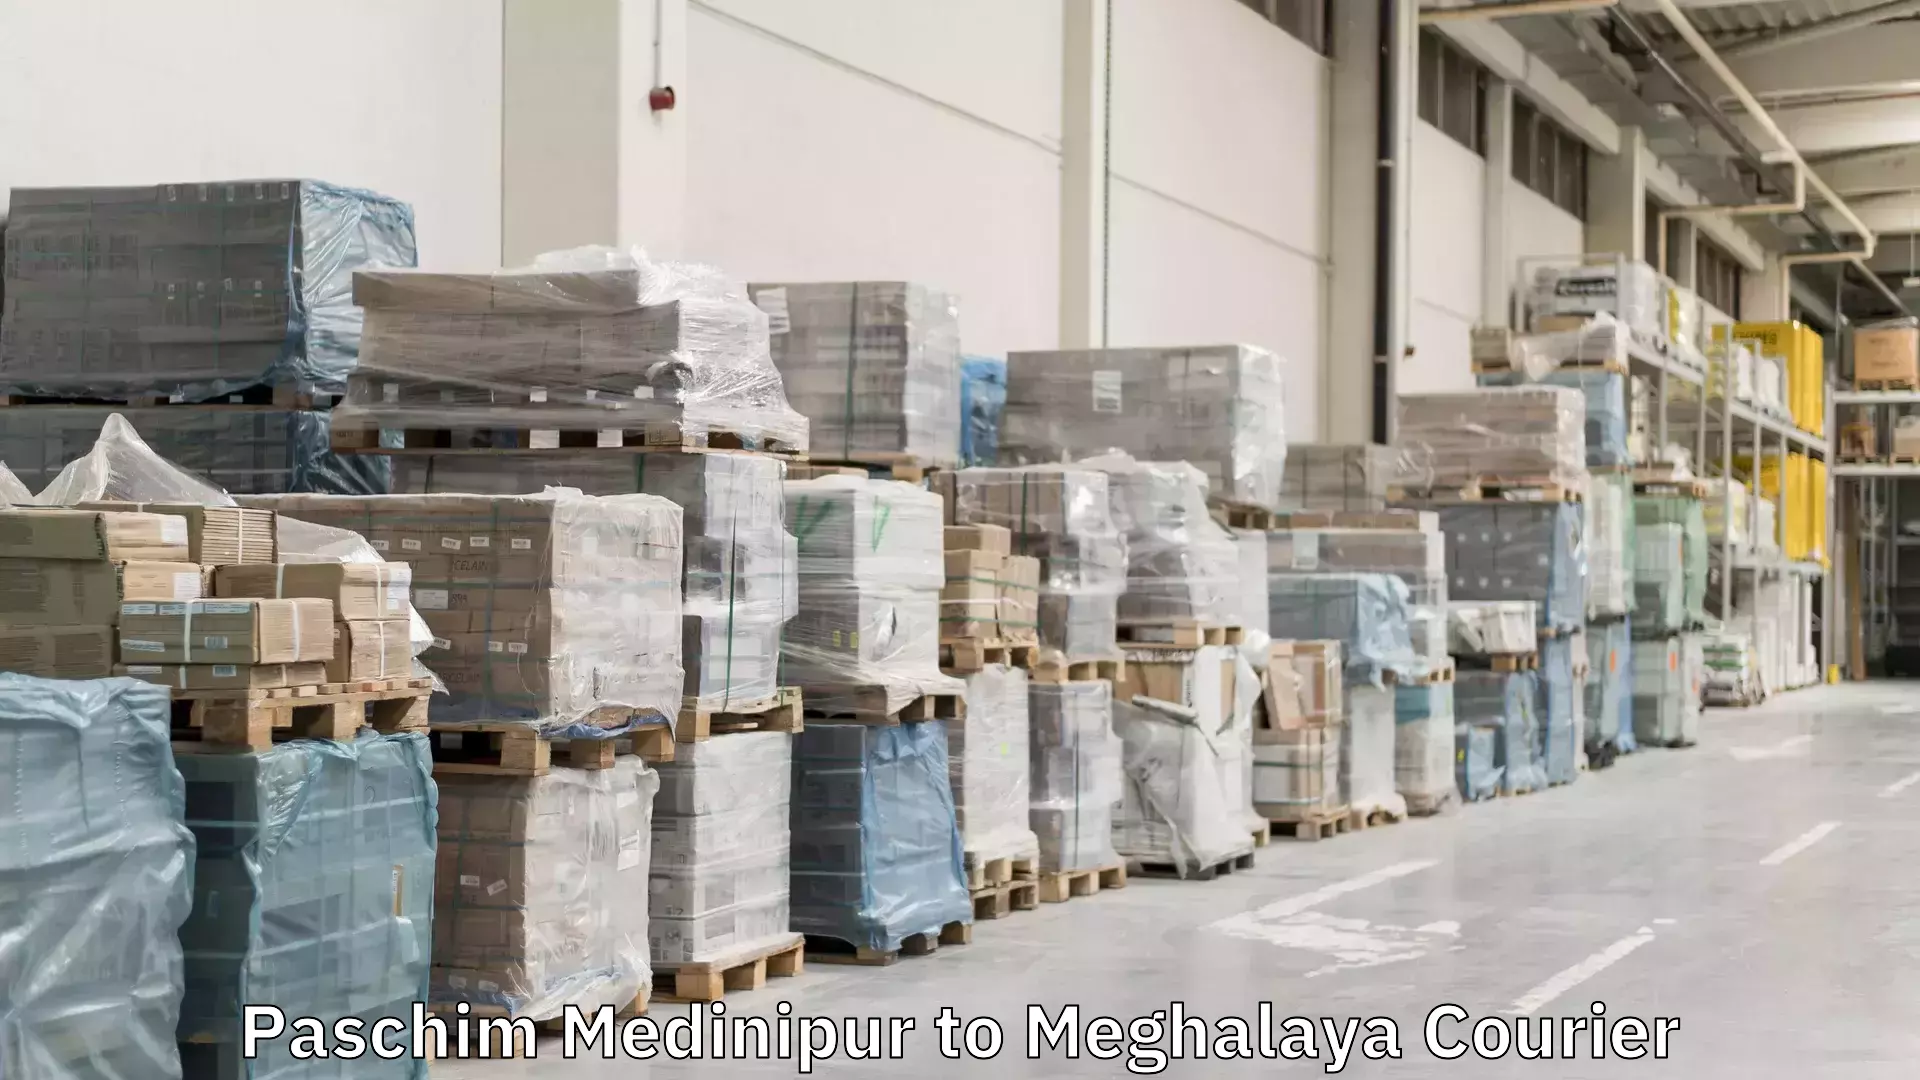 Courier service innovation Paschim Medinipur to Meghalaya